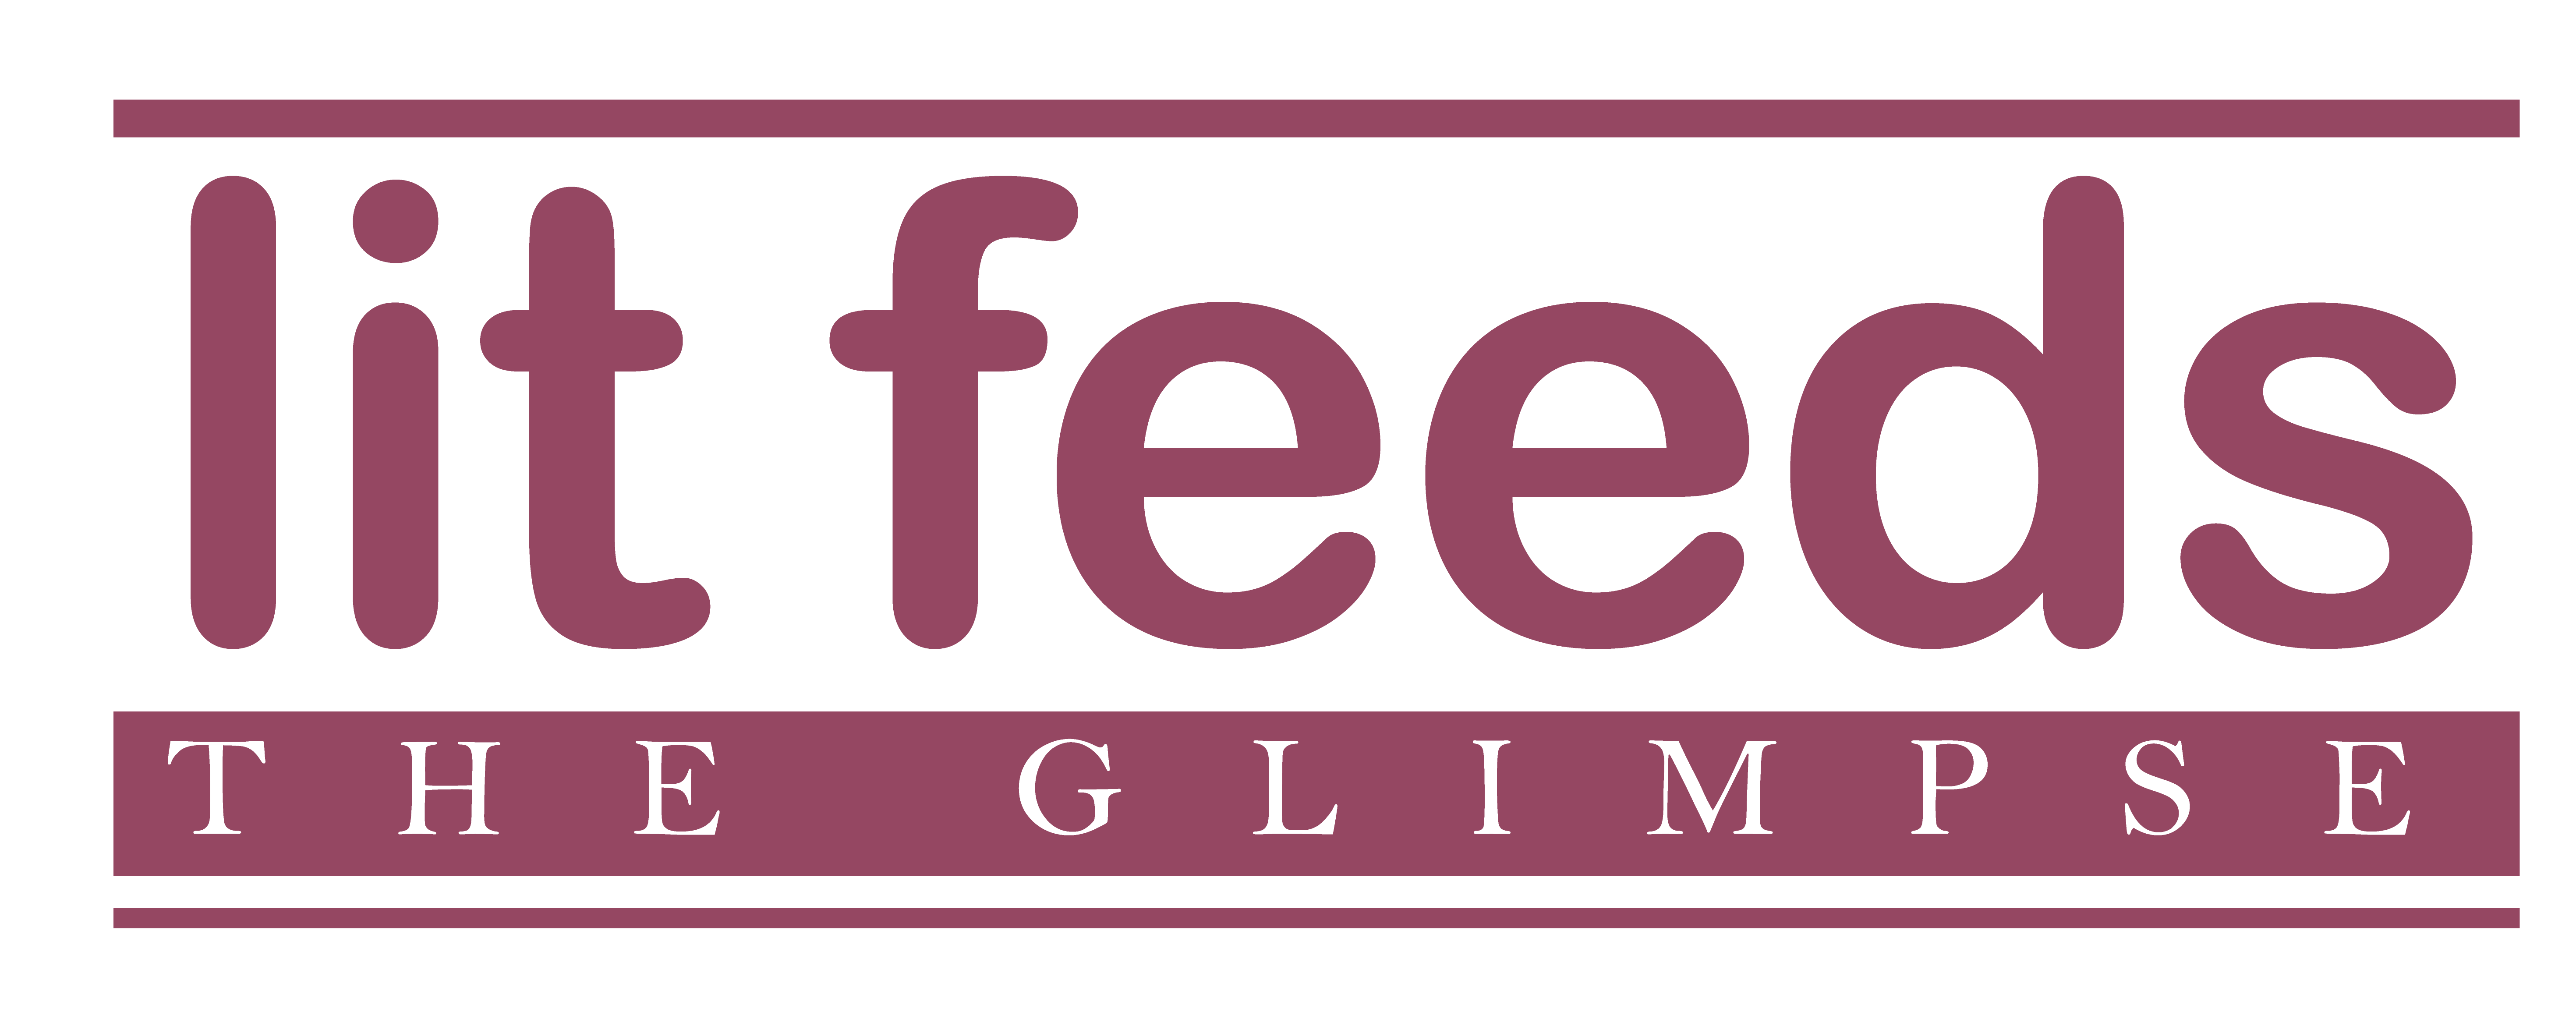 LitFeeds logo